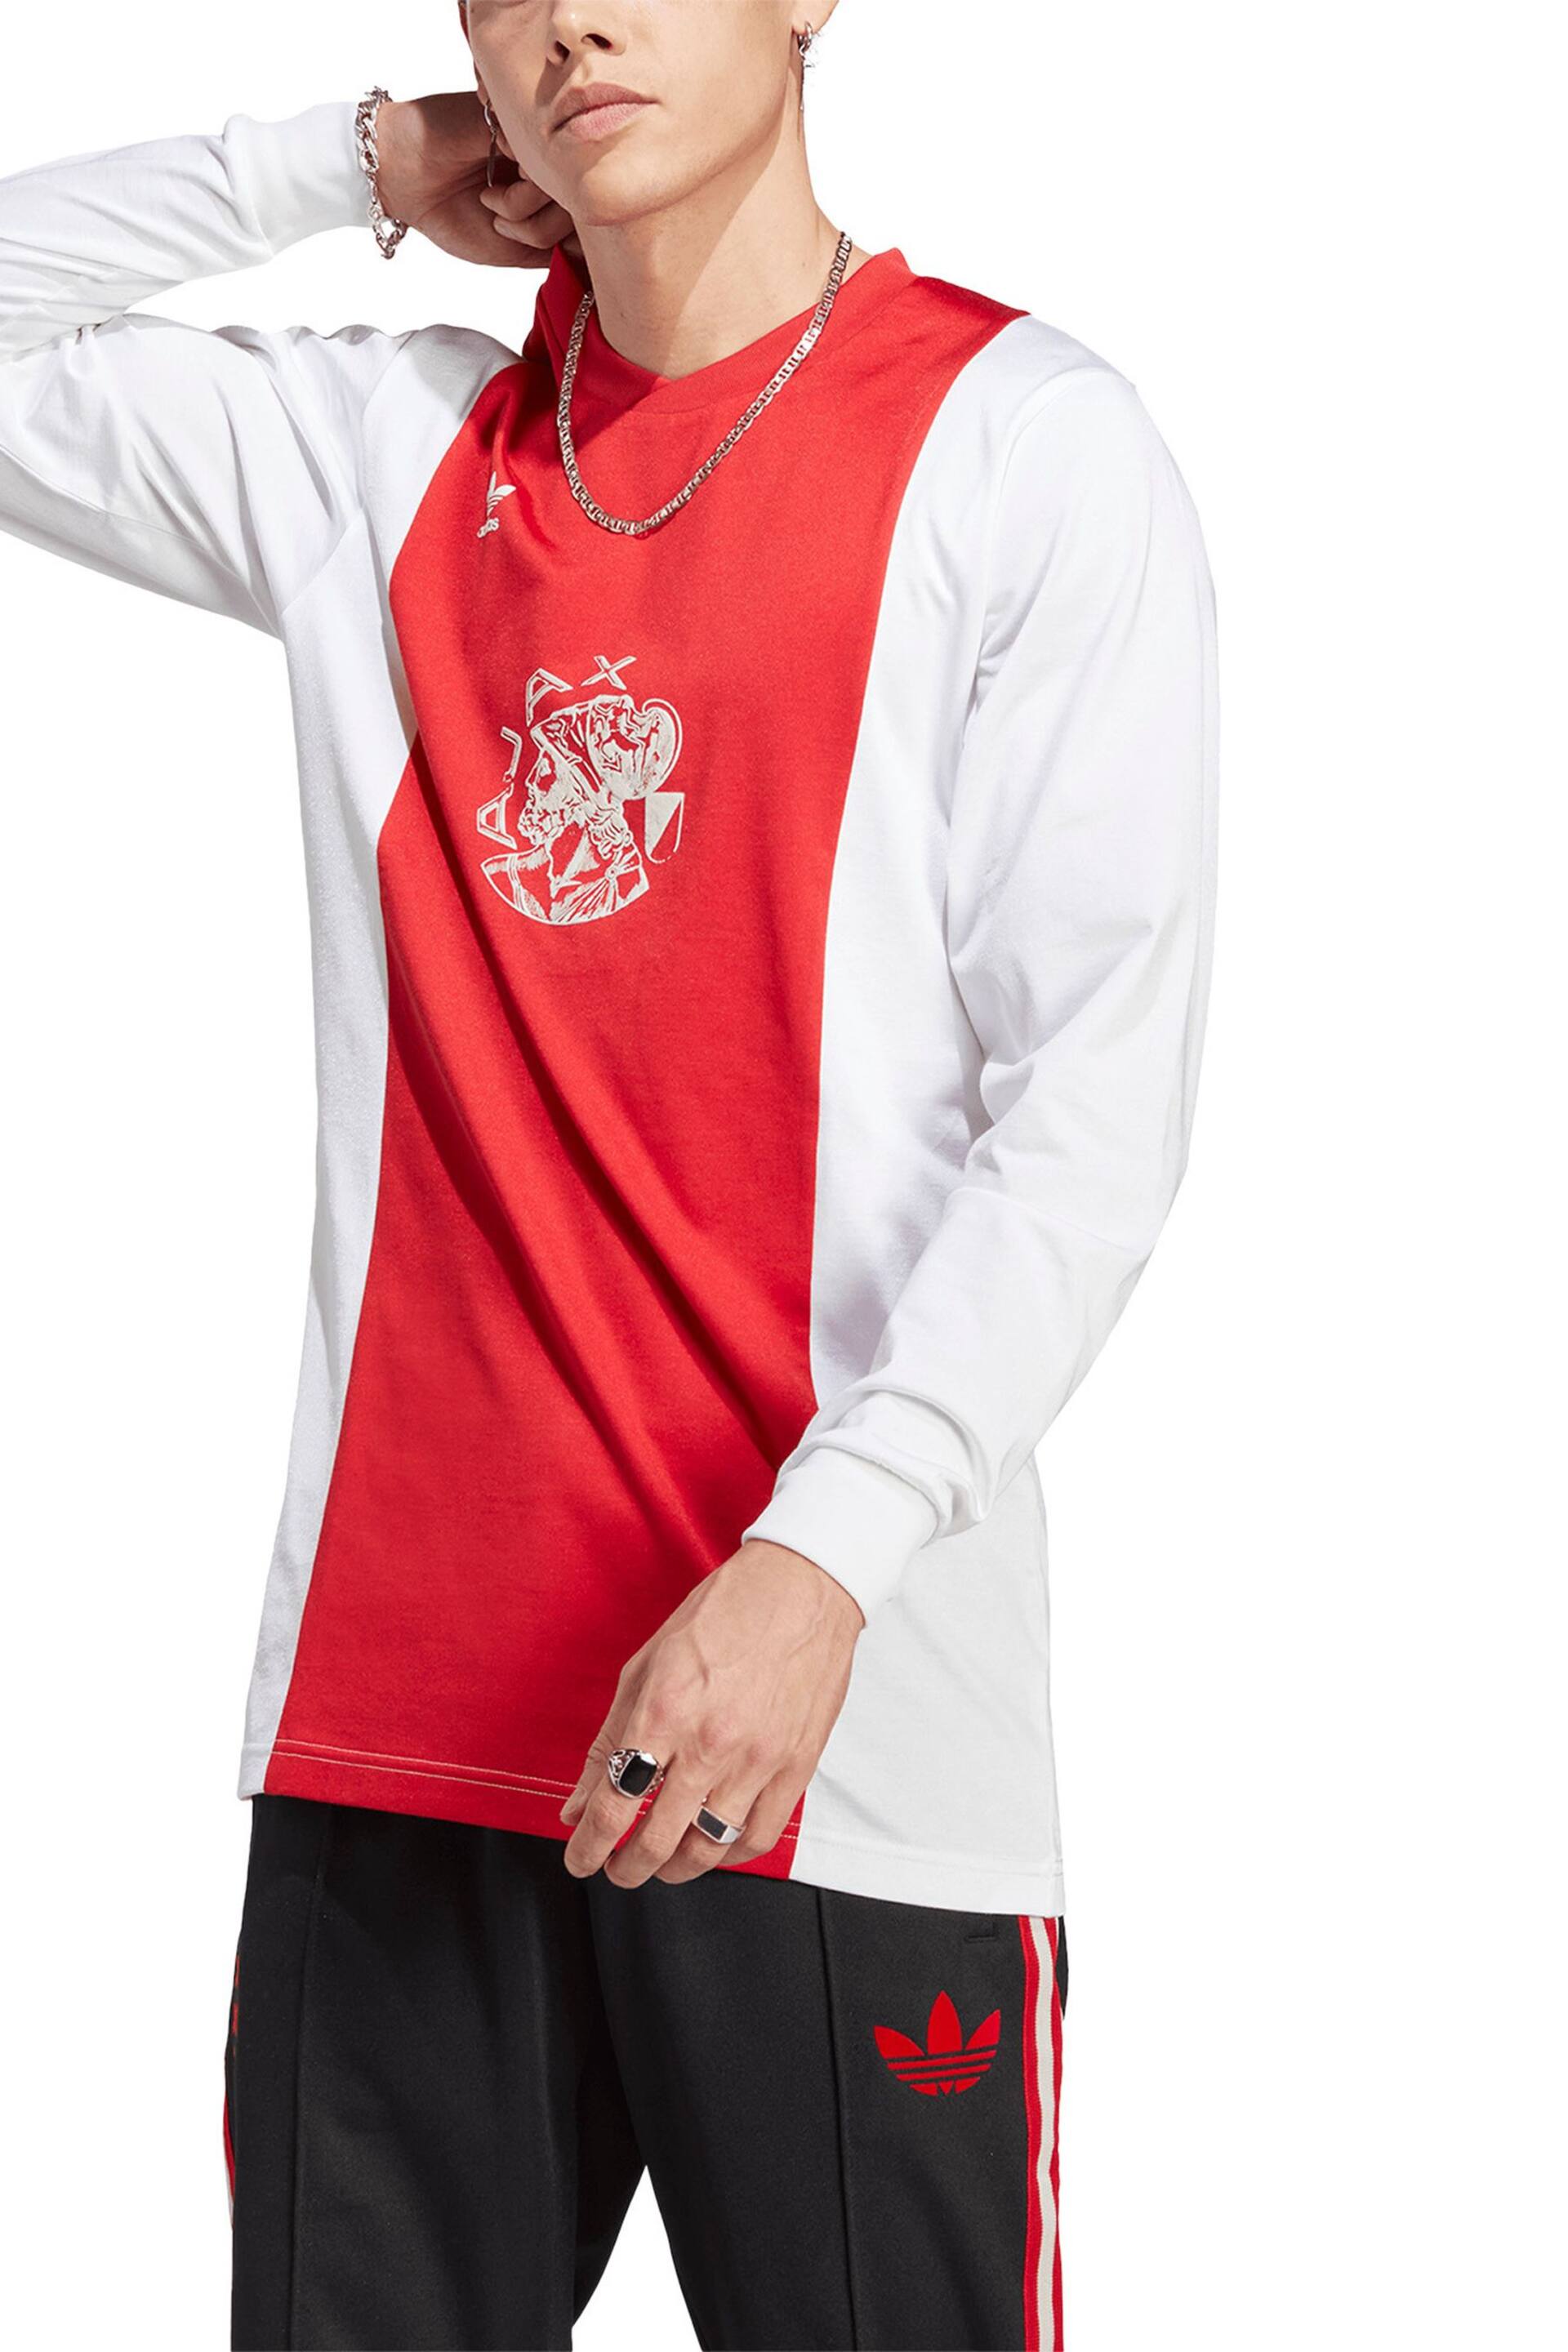 adidas Red Ajax x Originals OG Long Sleeve Jersey - Image 1 of 3